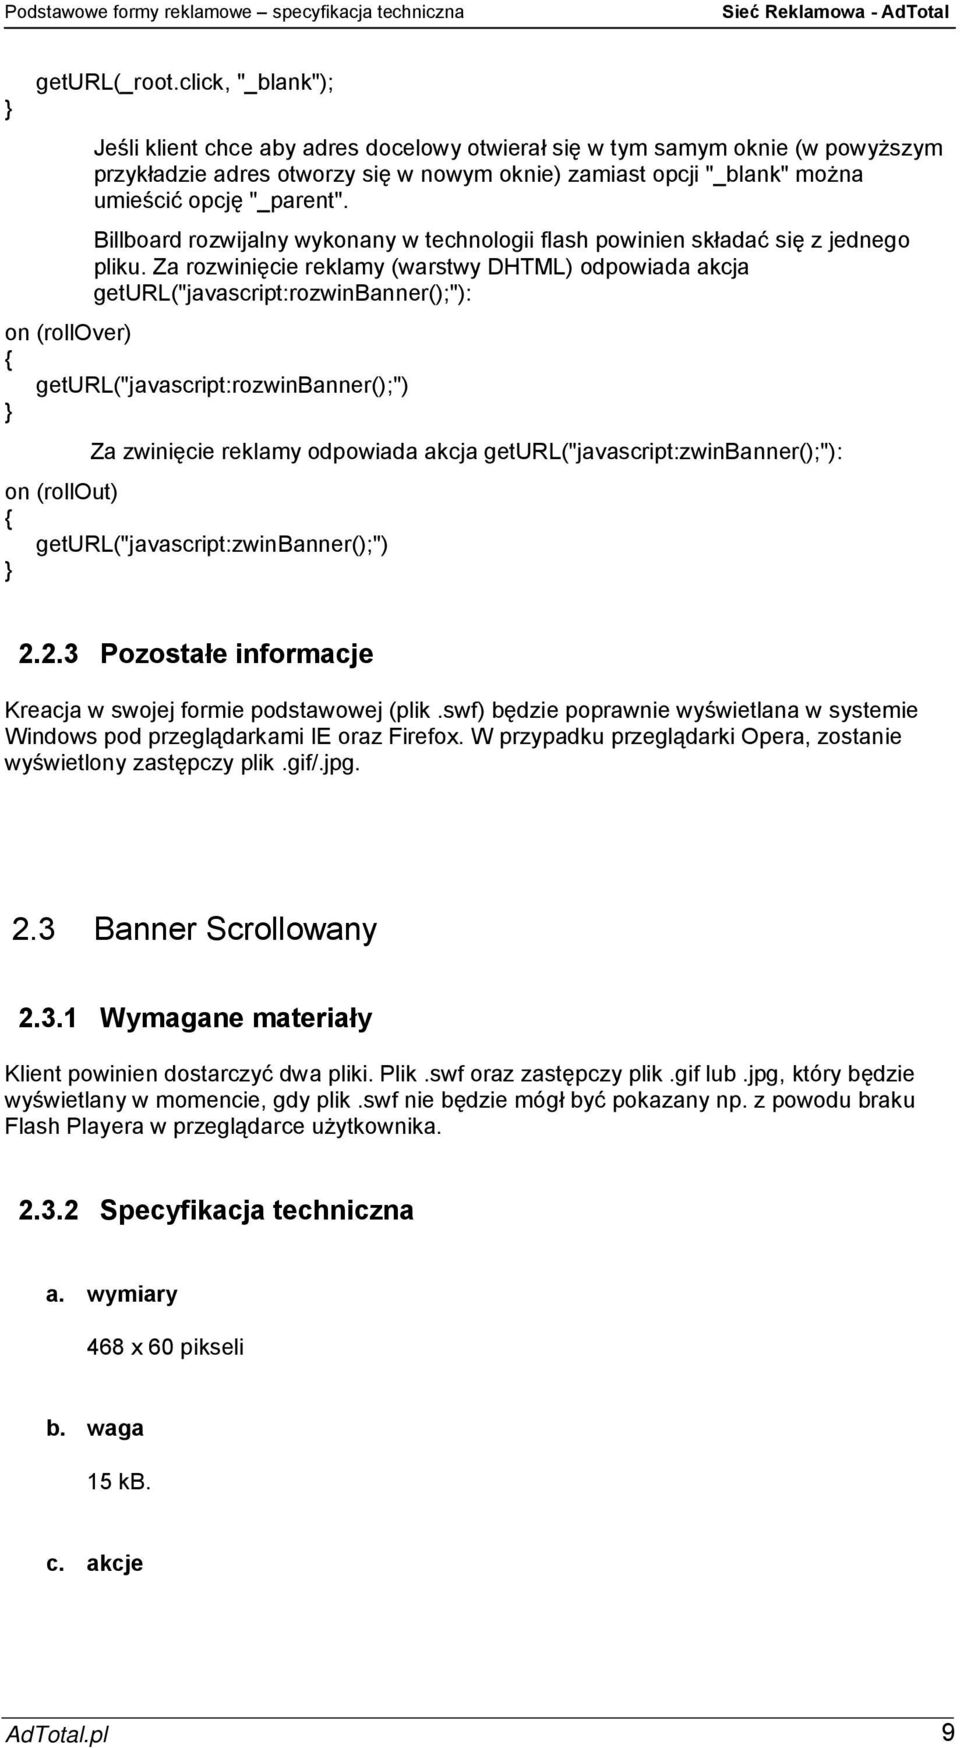 akcja geturl("javascript:zwinbanner();"): on (rollout) geturl("javascript:zwinbanner();") 2.2.3 Pozostałe informacje Windows pod przeglądarkami IE oraz Firefox.